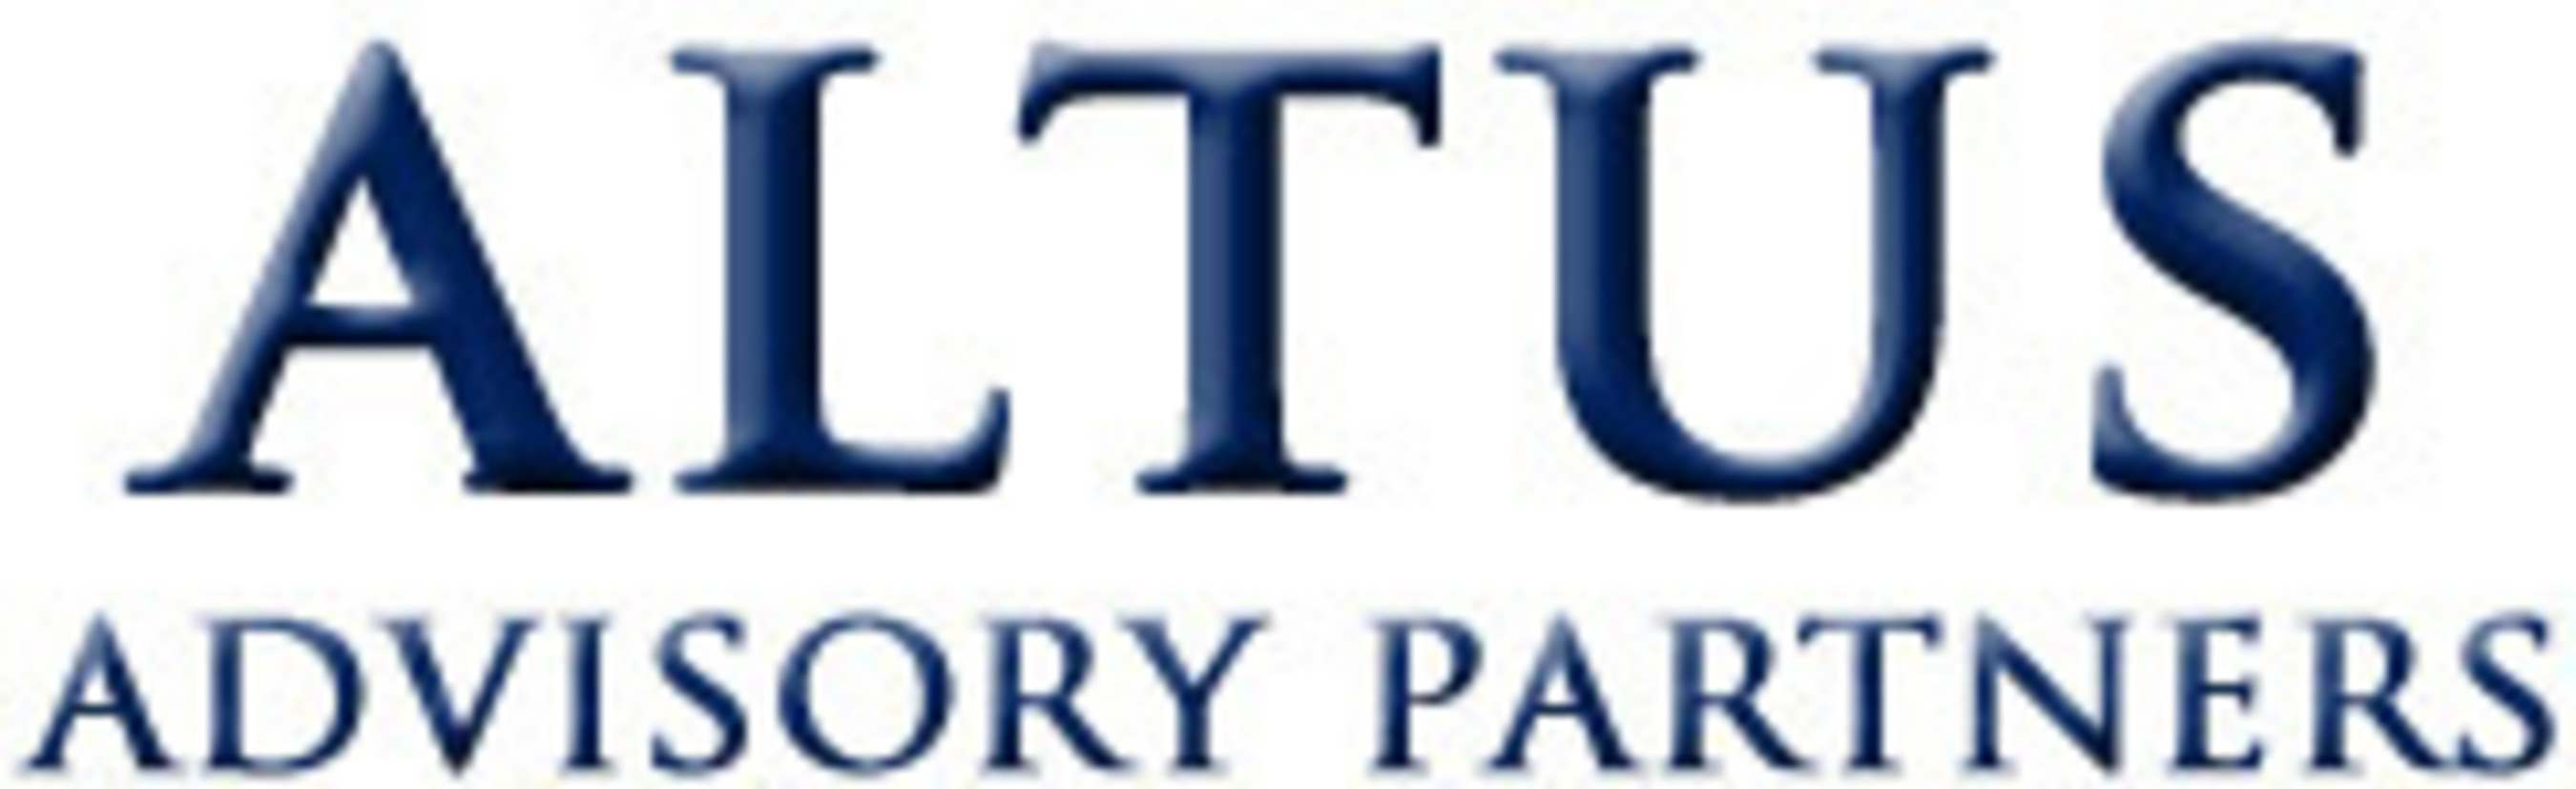 Altus Advisory Partners (PRNewsFoto/Altus Advisory Partners)